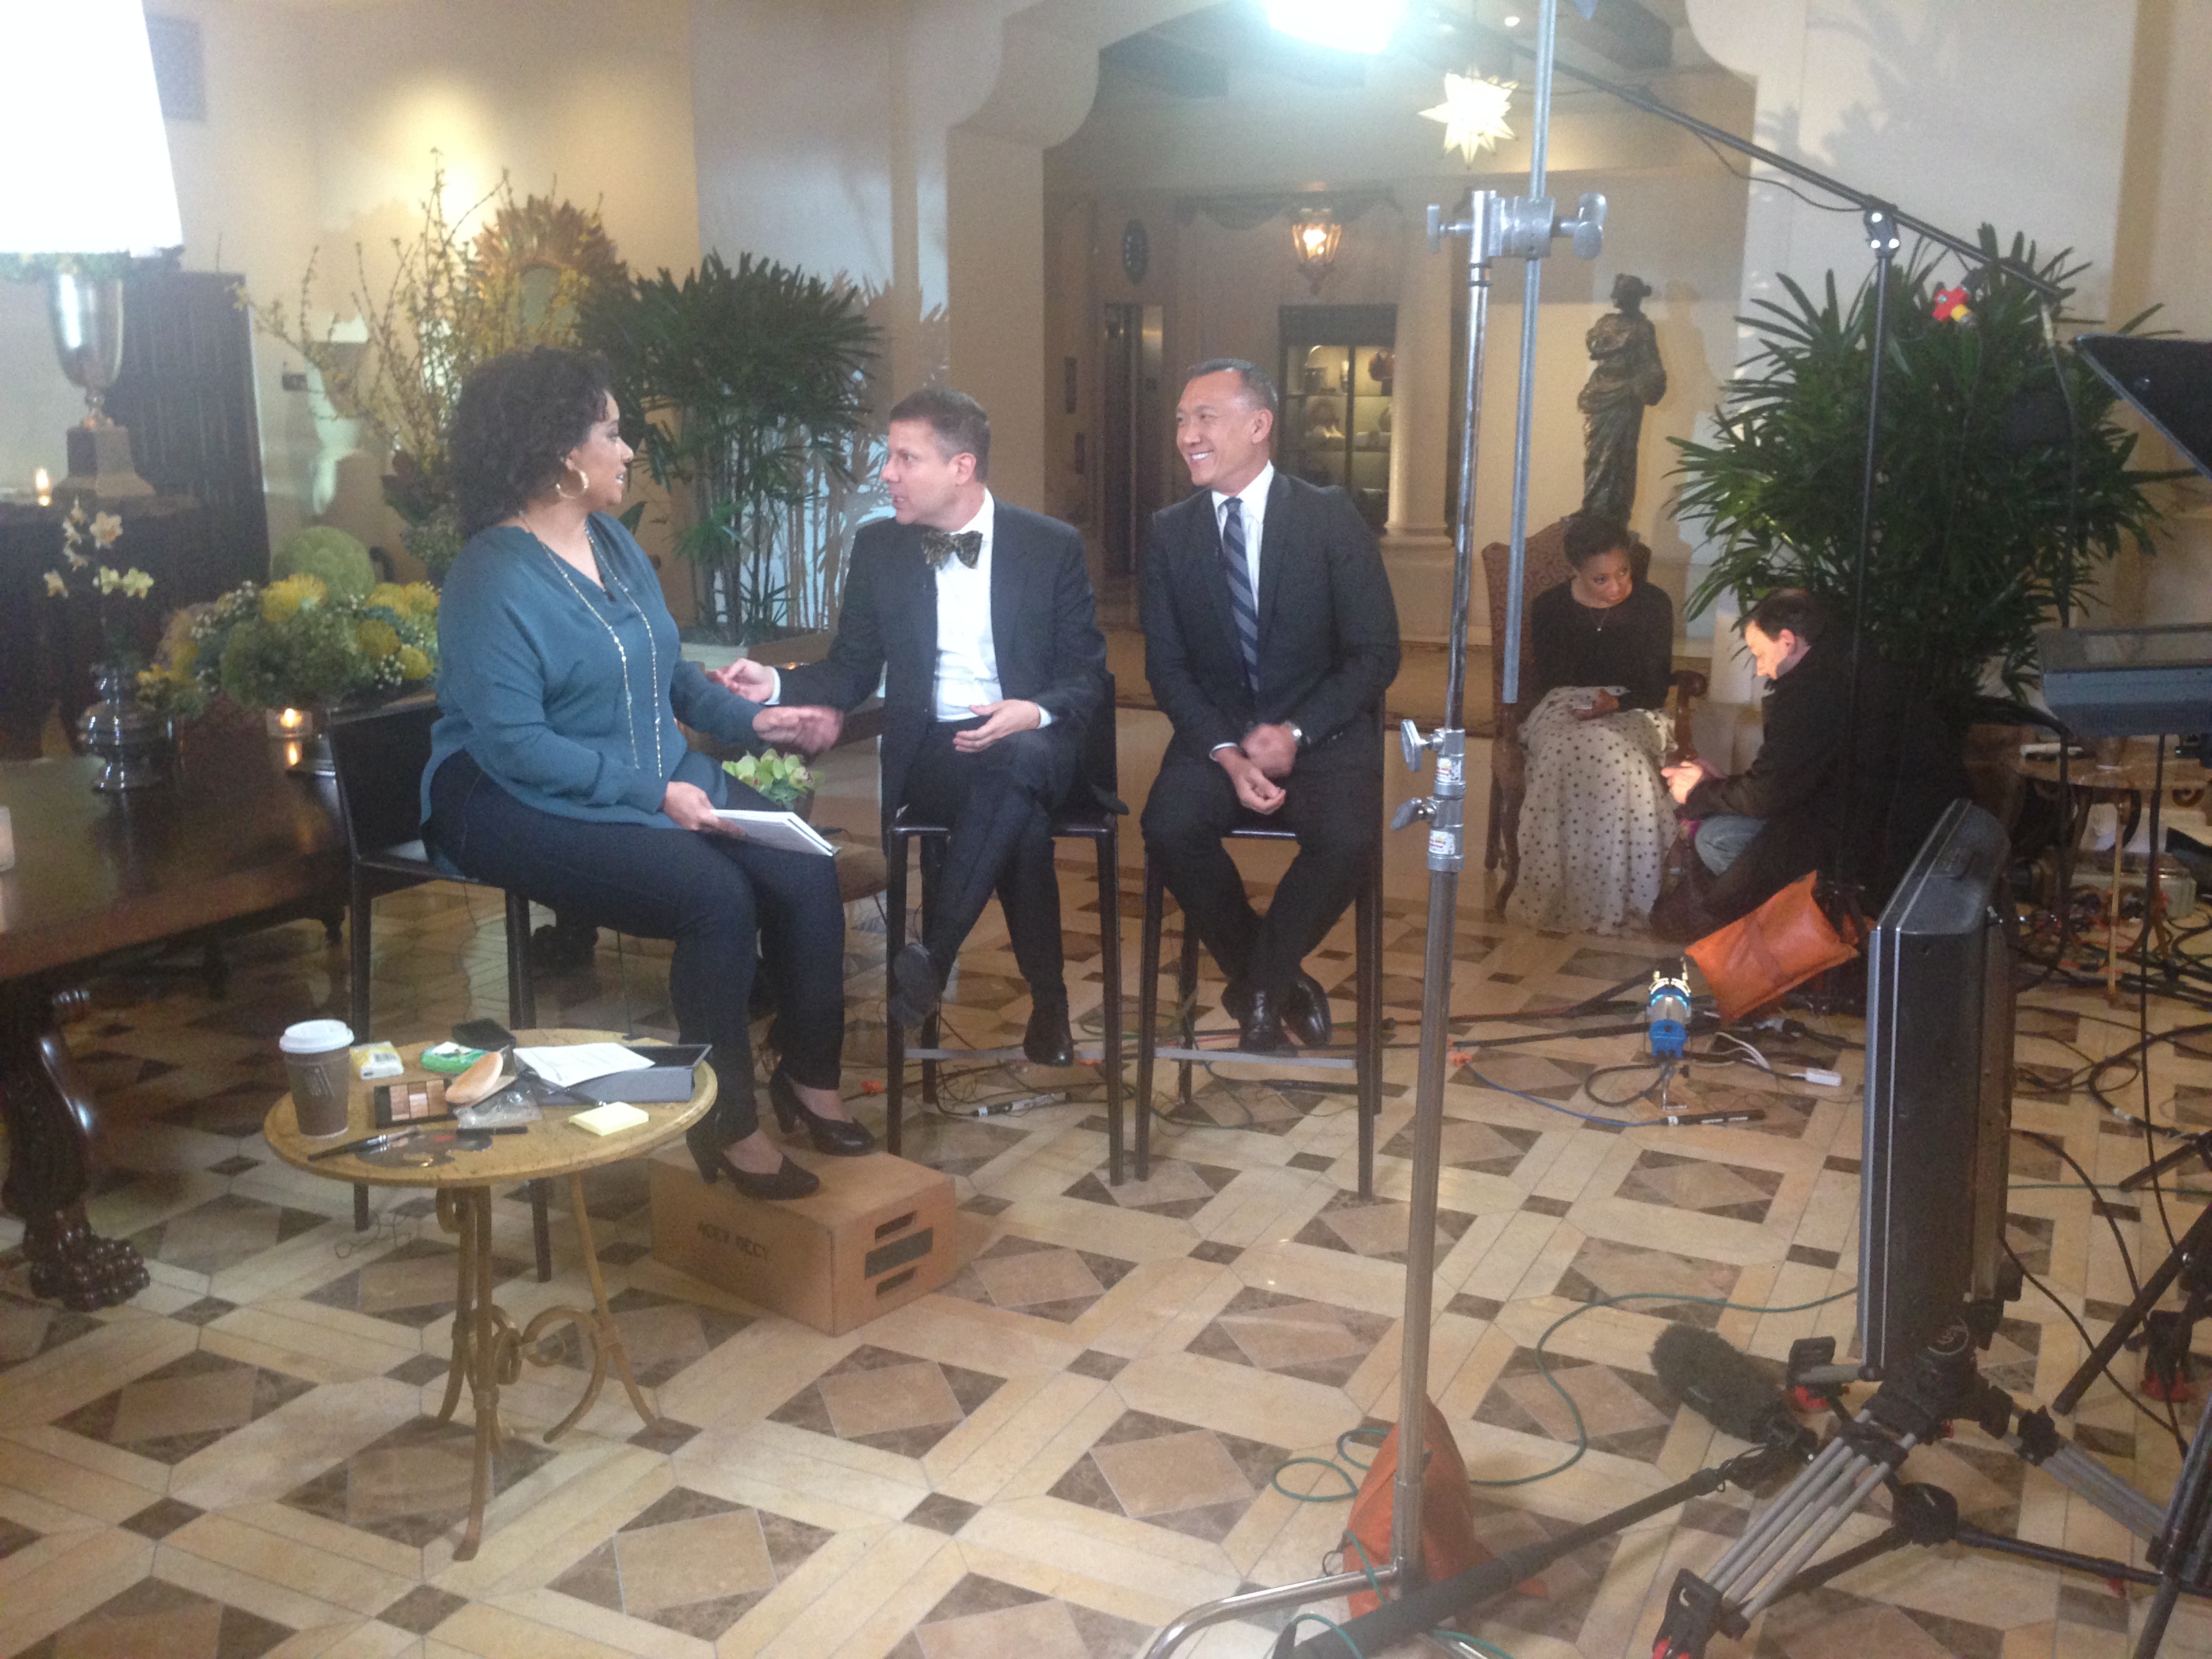 Shooting Live Oscar segment on CNN with Michaela Pereira and Joe Zee from Elle Magazine